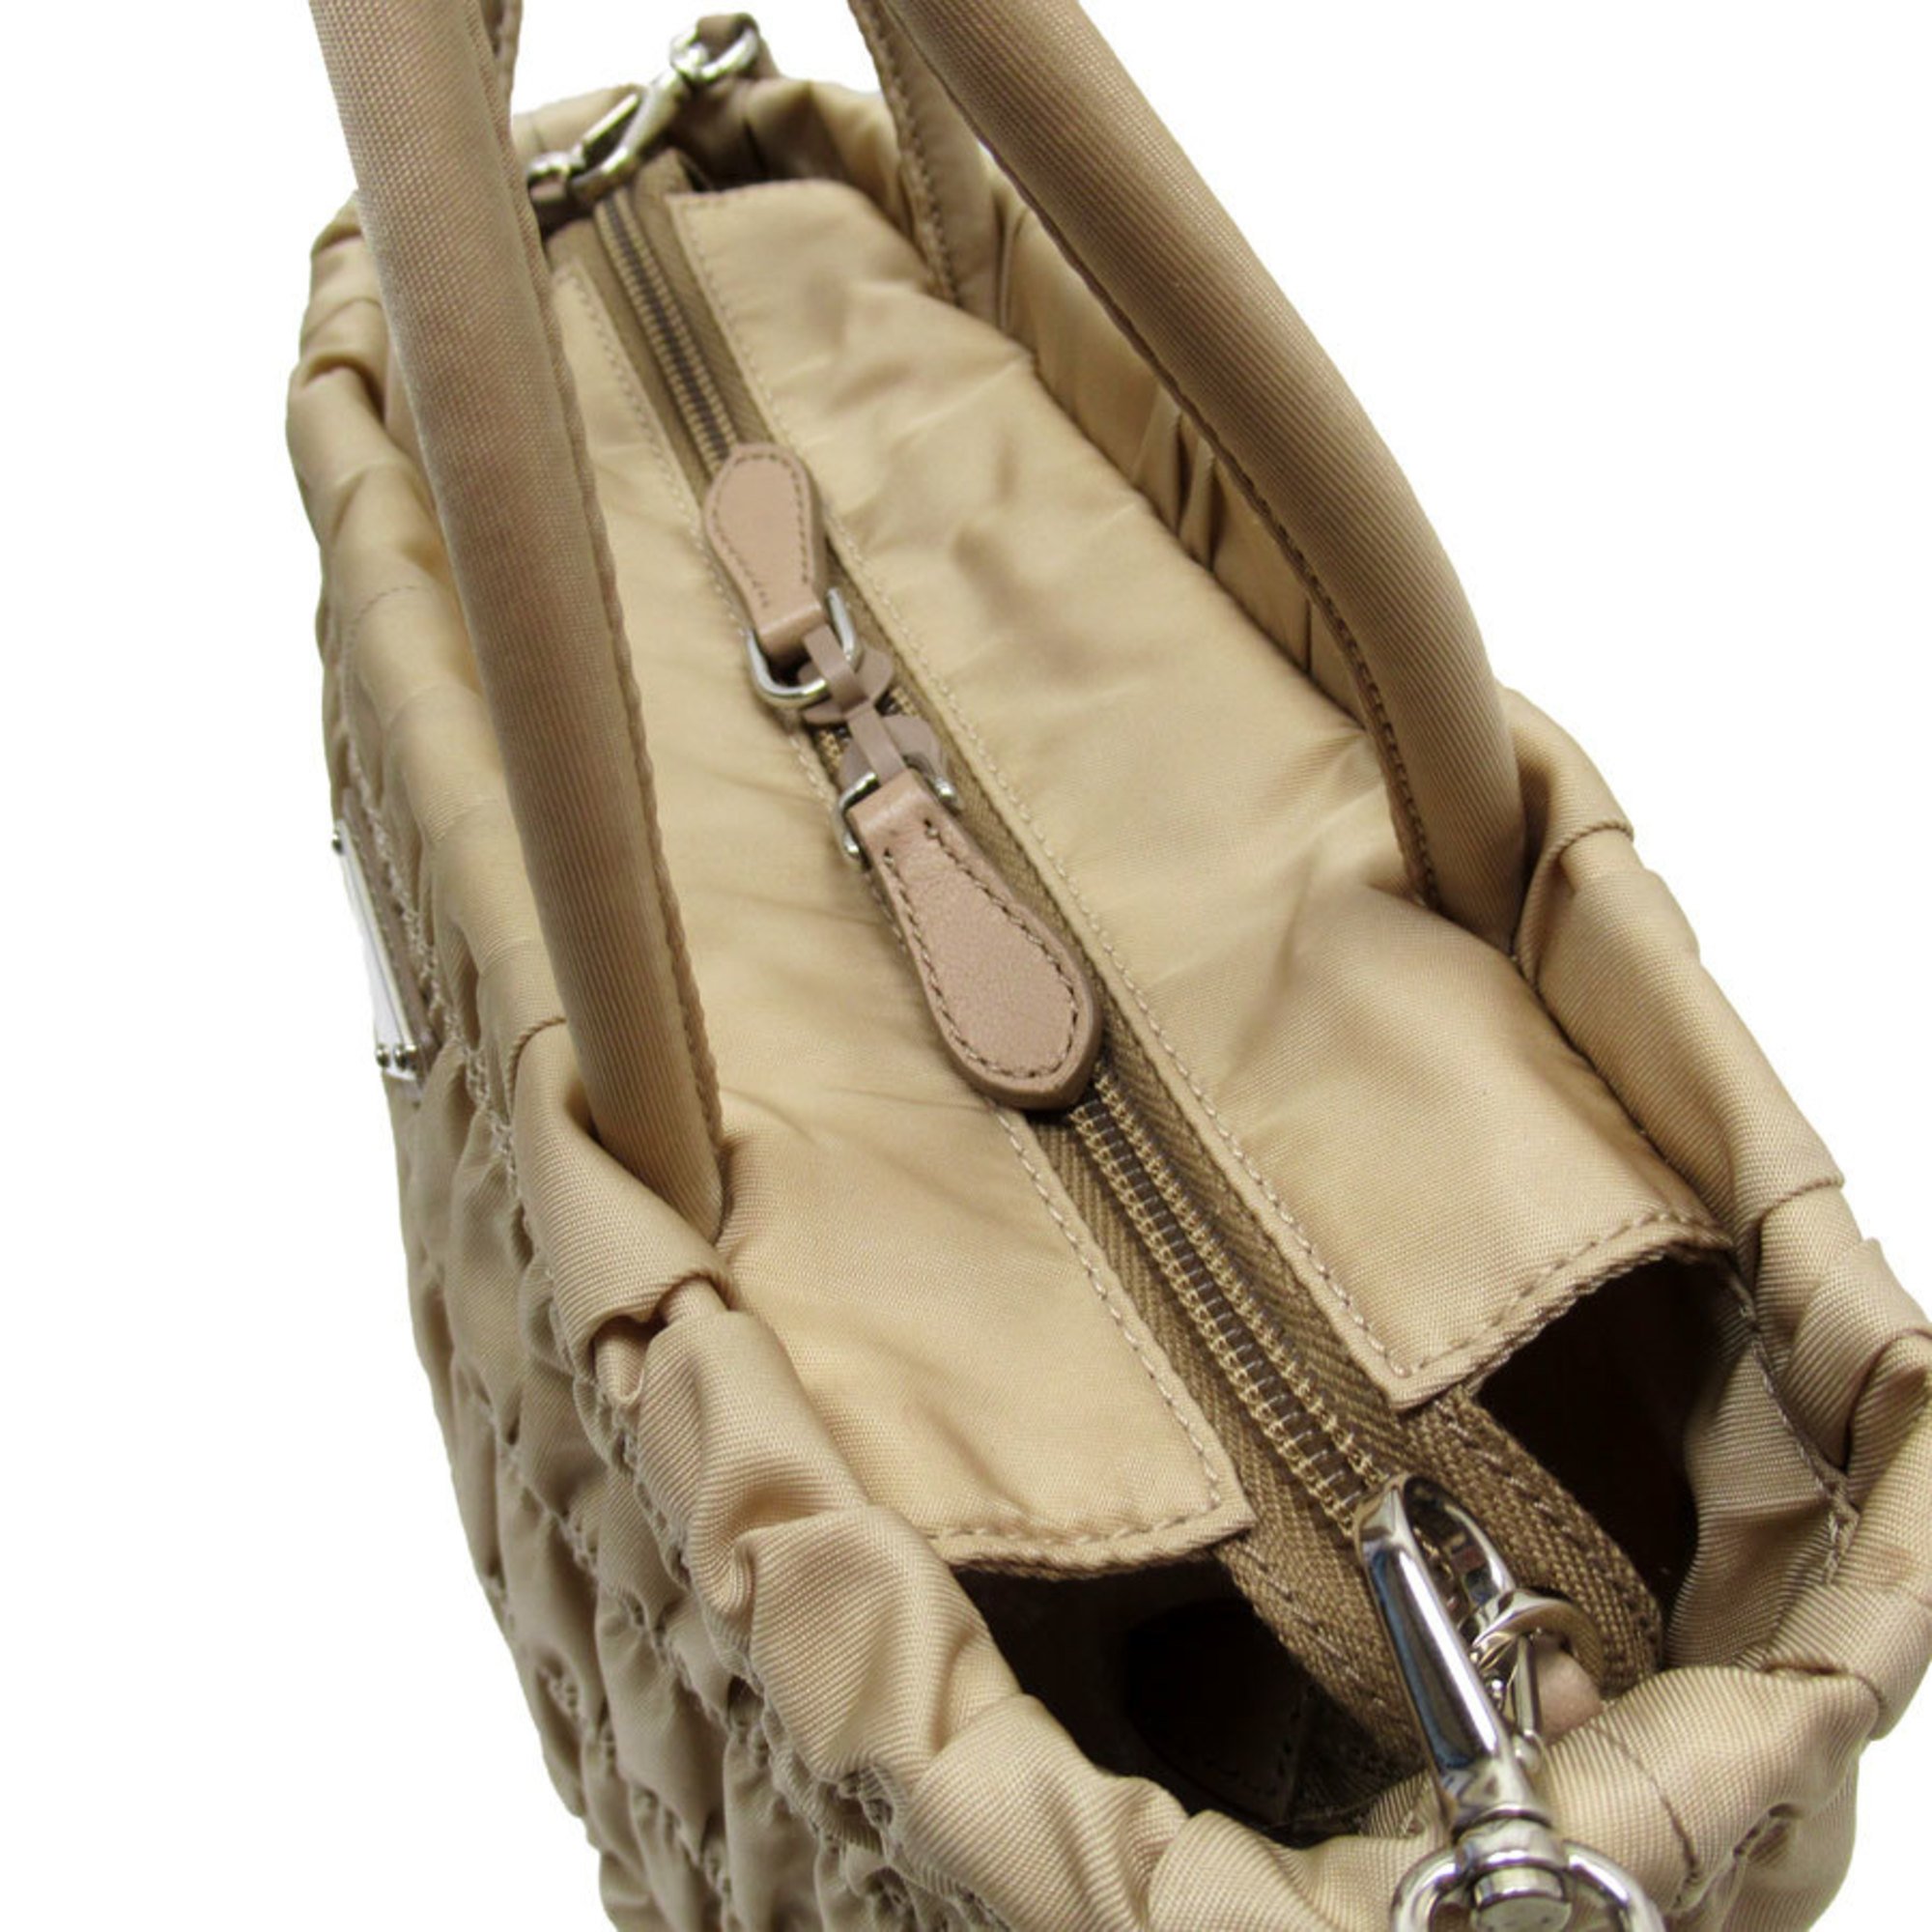 PRADA Handbag Shoulder Bag Nylon/Leather Light Beige Silver Women's